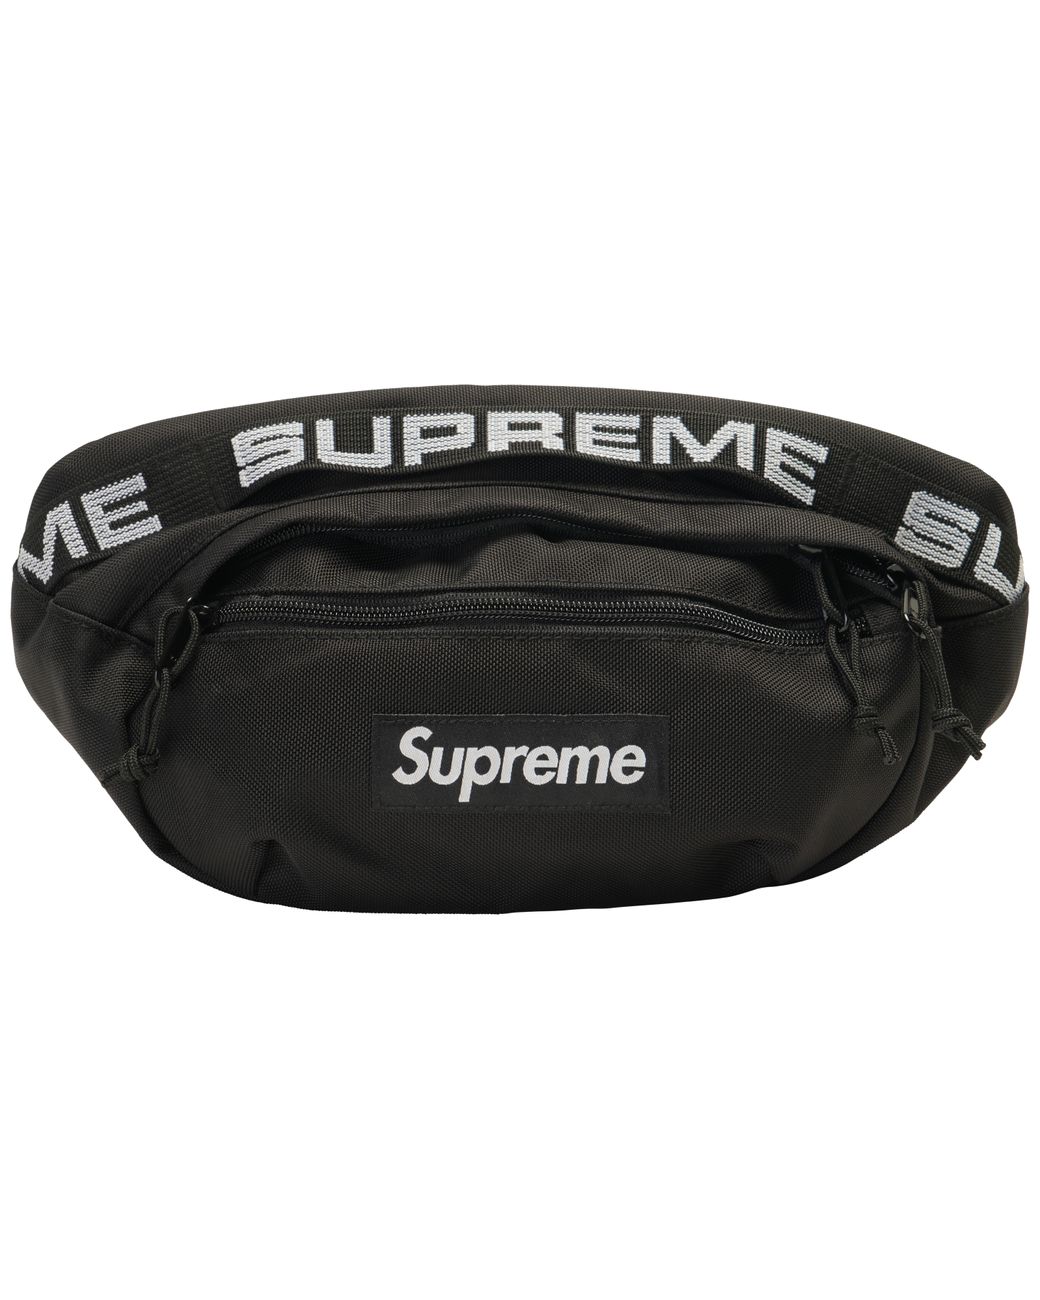 supreme fanny pack ss18 black